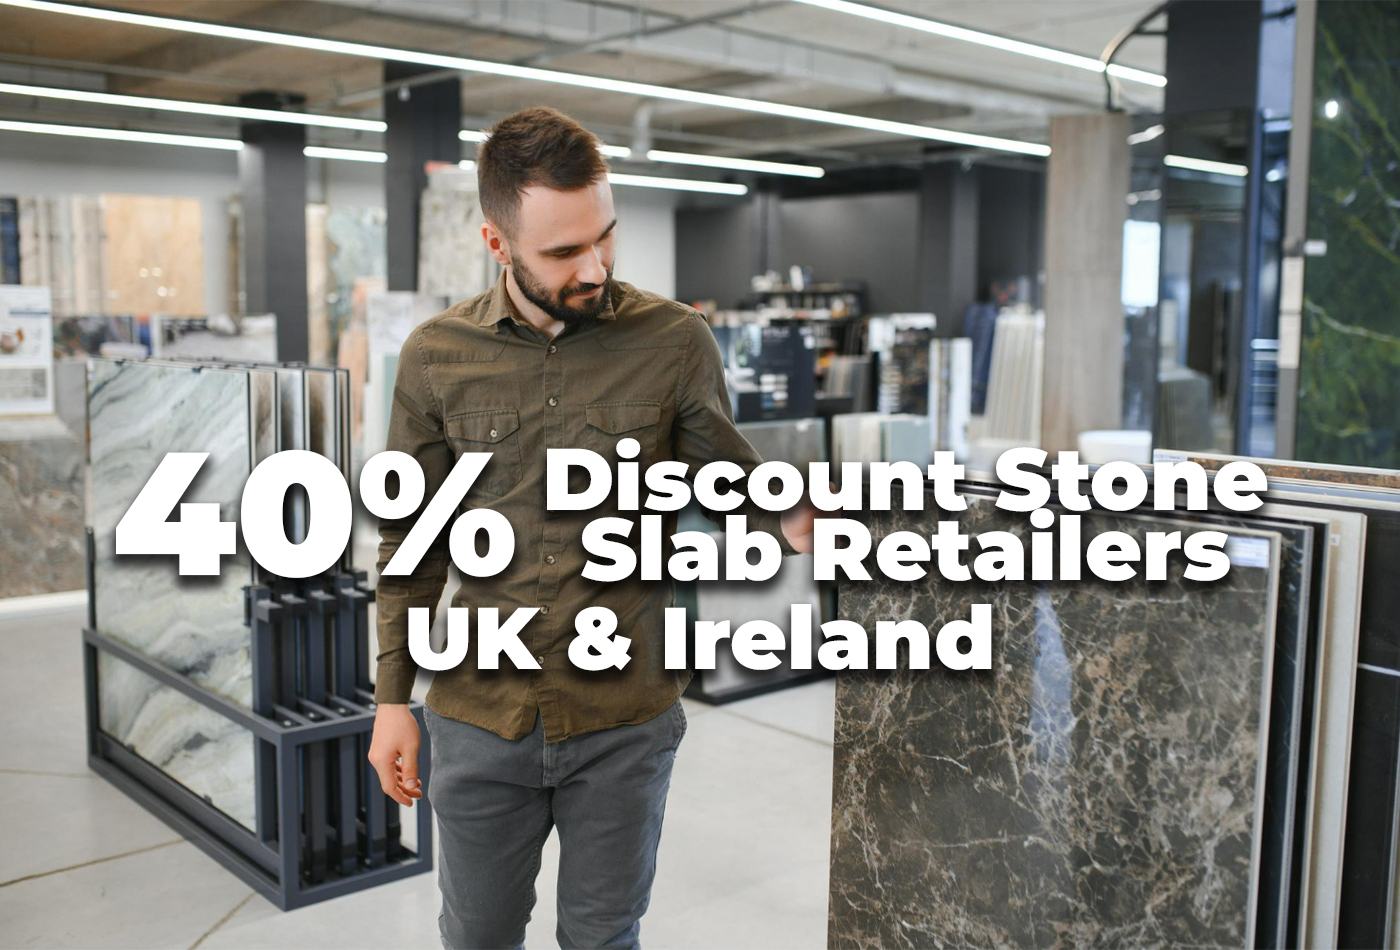 40% Discount Stone Slab Retailers: UK & Ireland